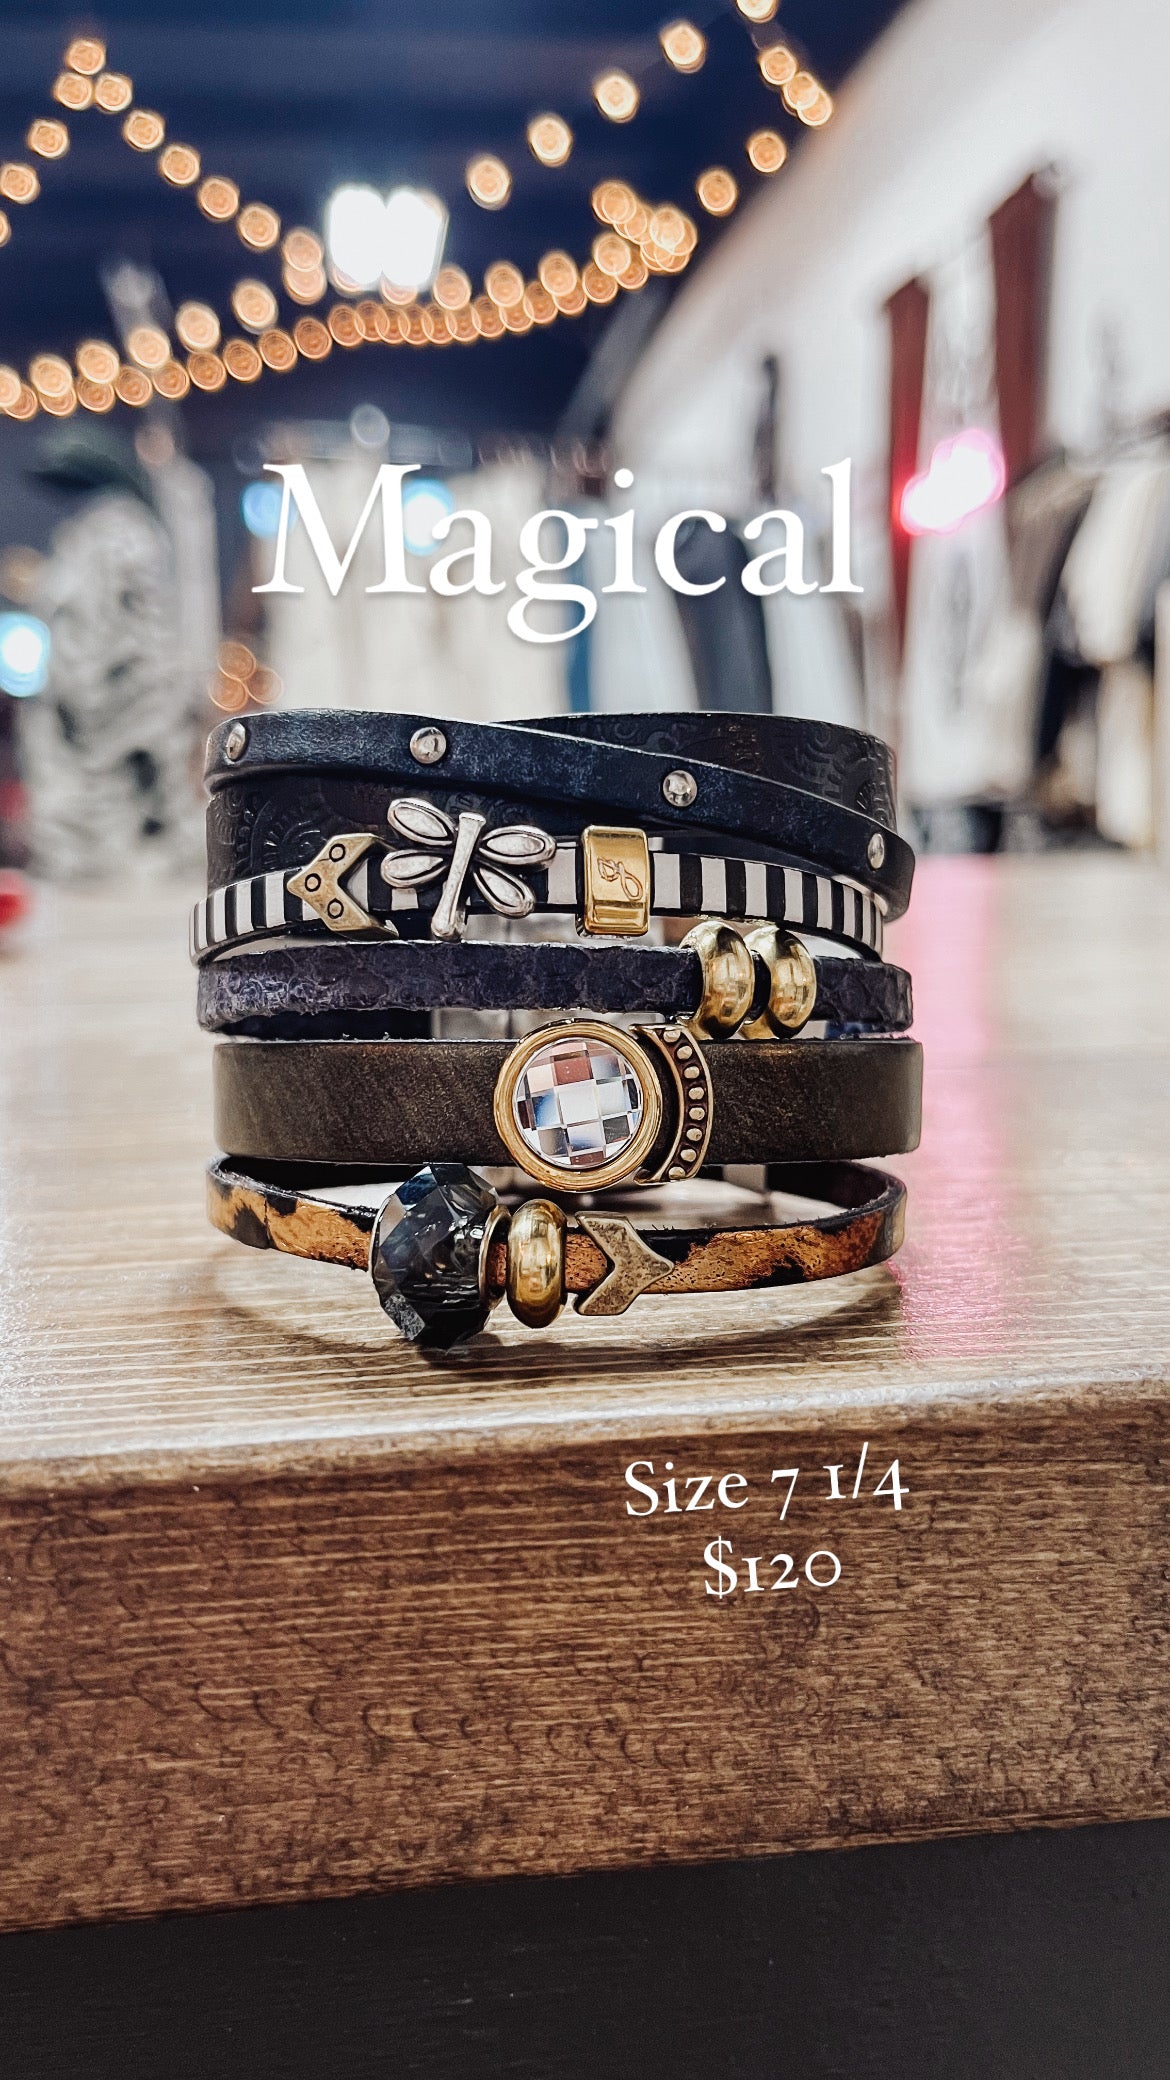 “Magical” Leather Bracelet